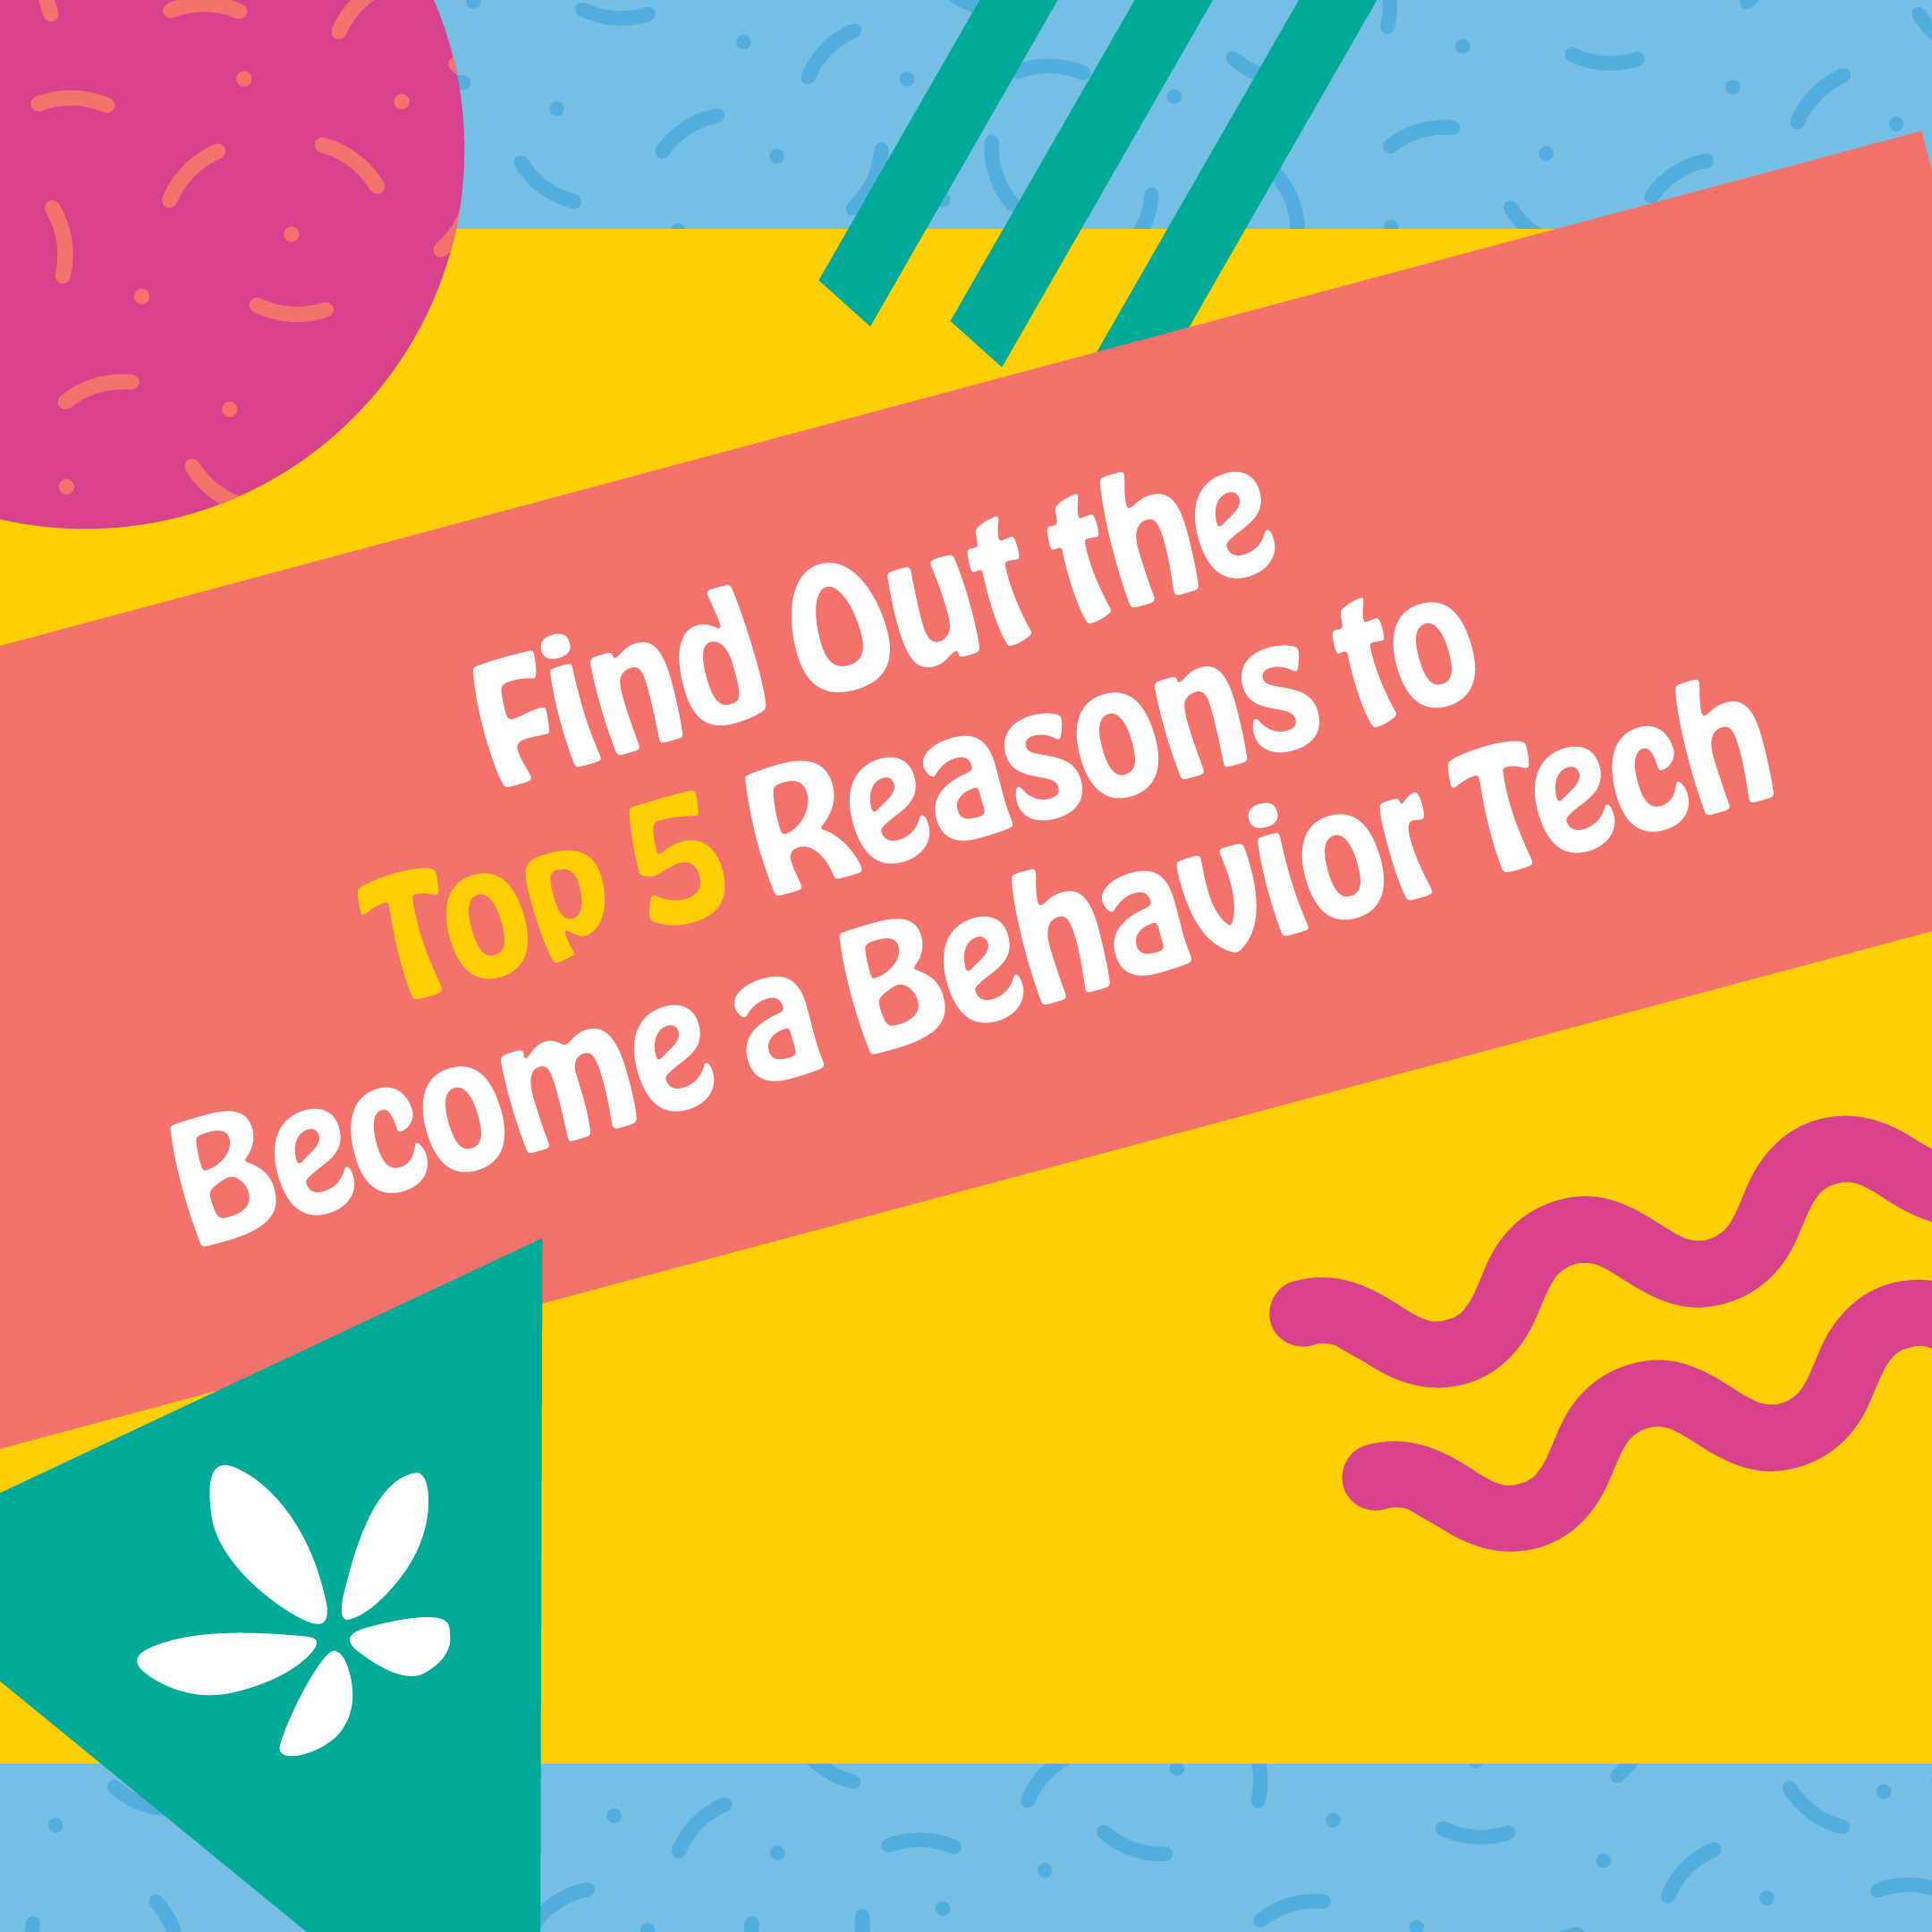 Top 5 Reasons to Become a Behavior Tech